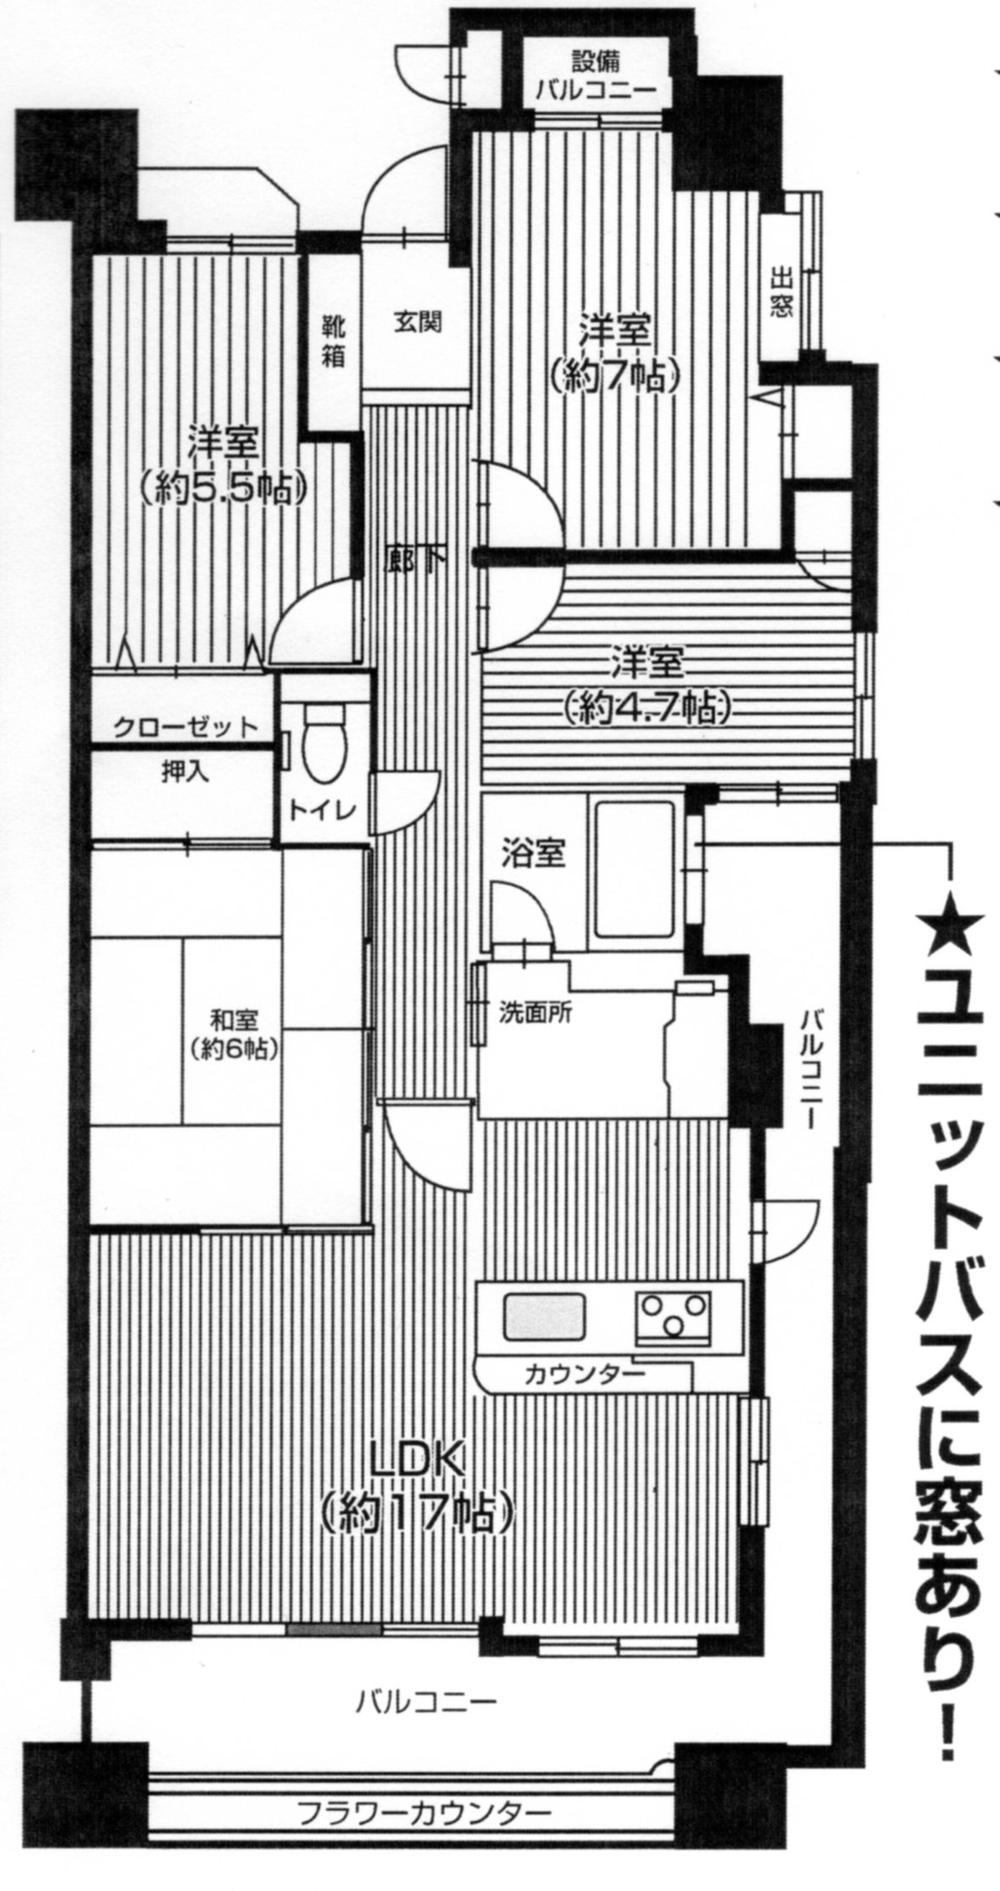 Floor plan. 4LDK, Price 26.5 million yen, Occupied area 86.96 sq m , Balcony area 18.76 sq m